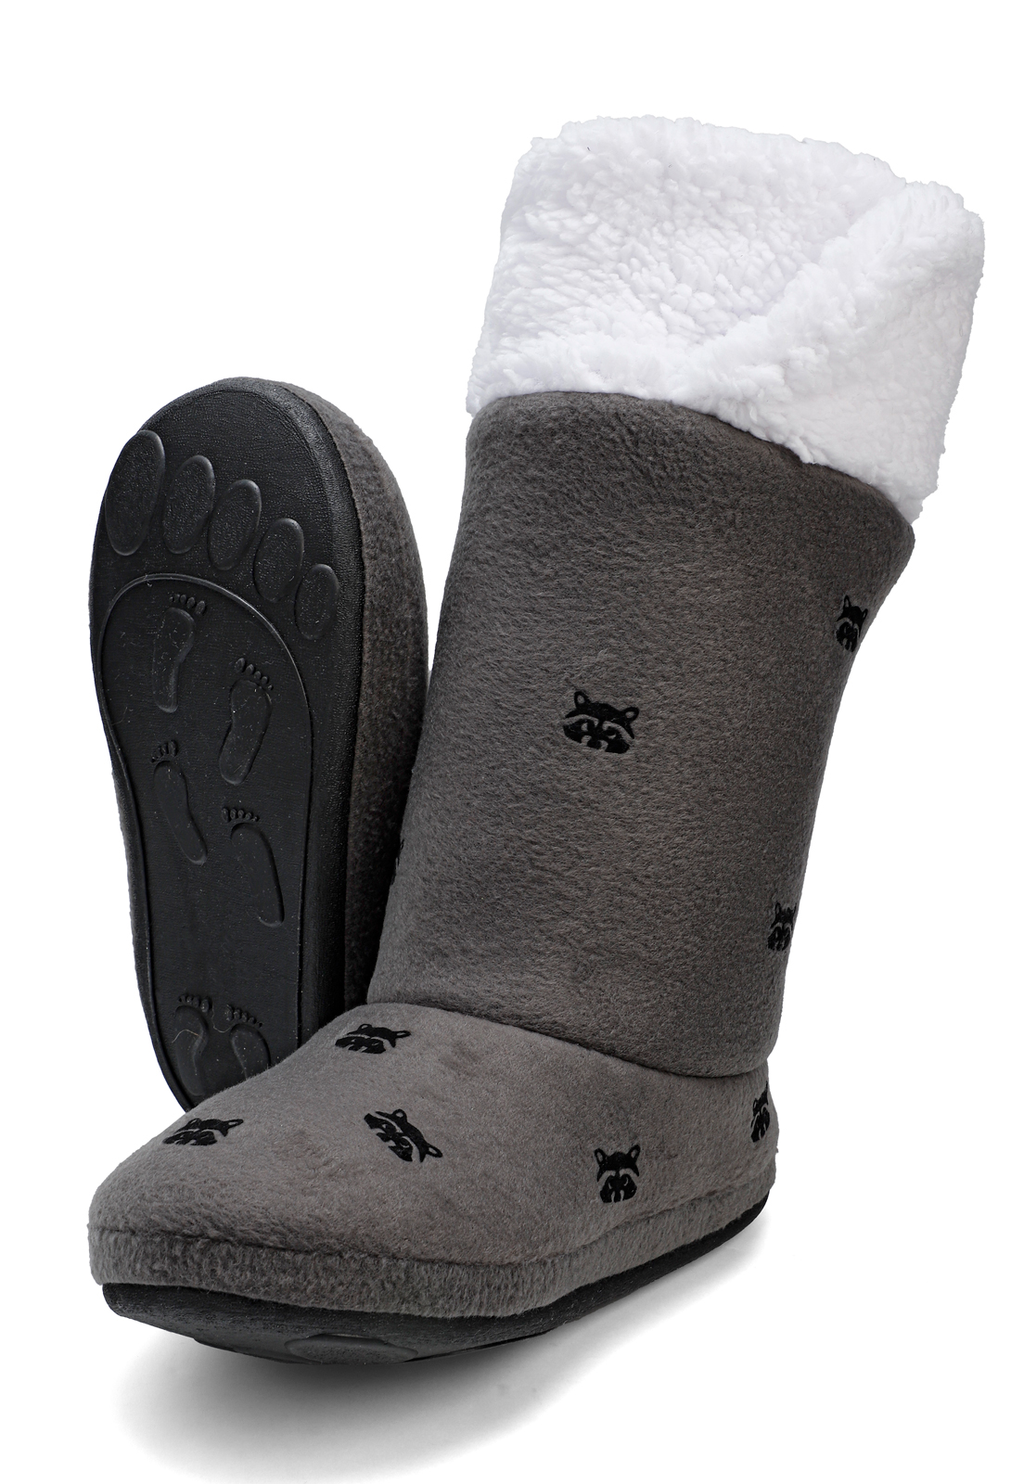 pantuflas botas calentadoras con suelas de caucho  color gris obscuro estampada con mapaches de terciopelo